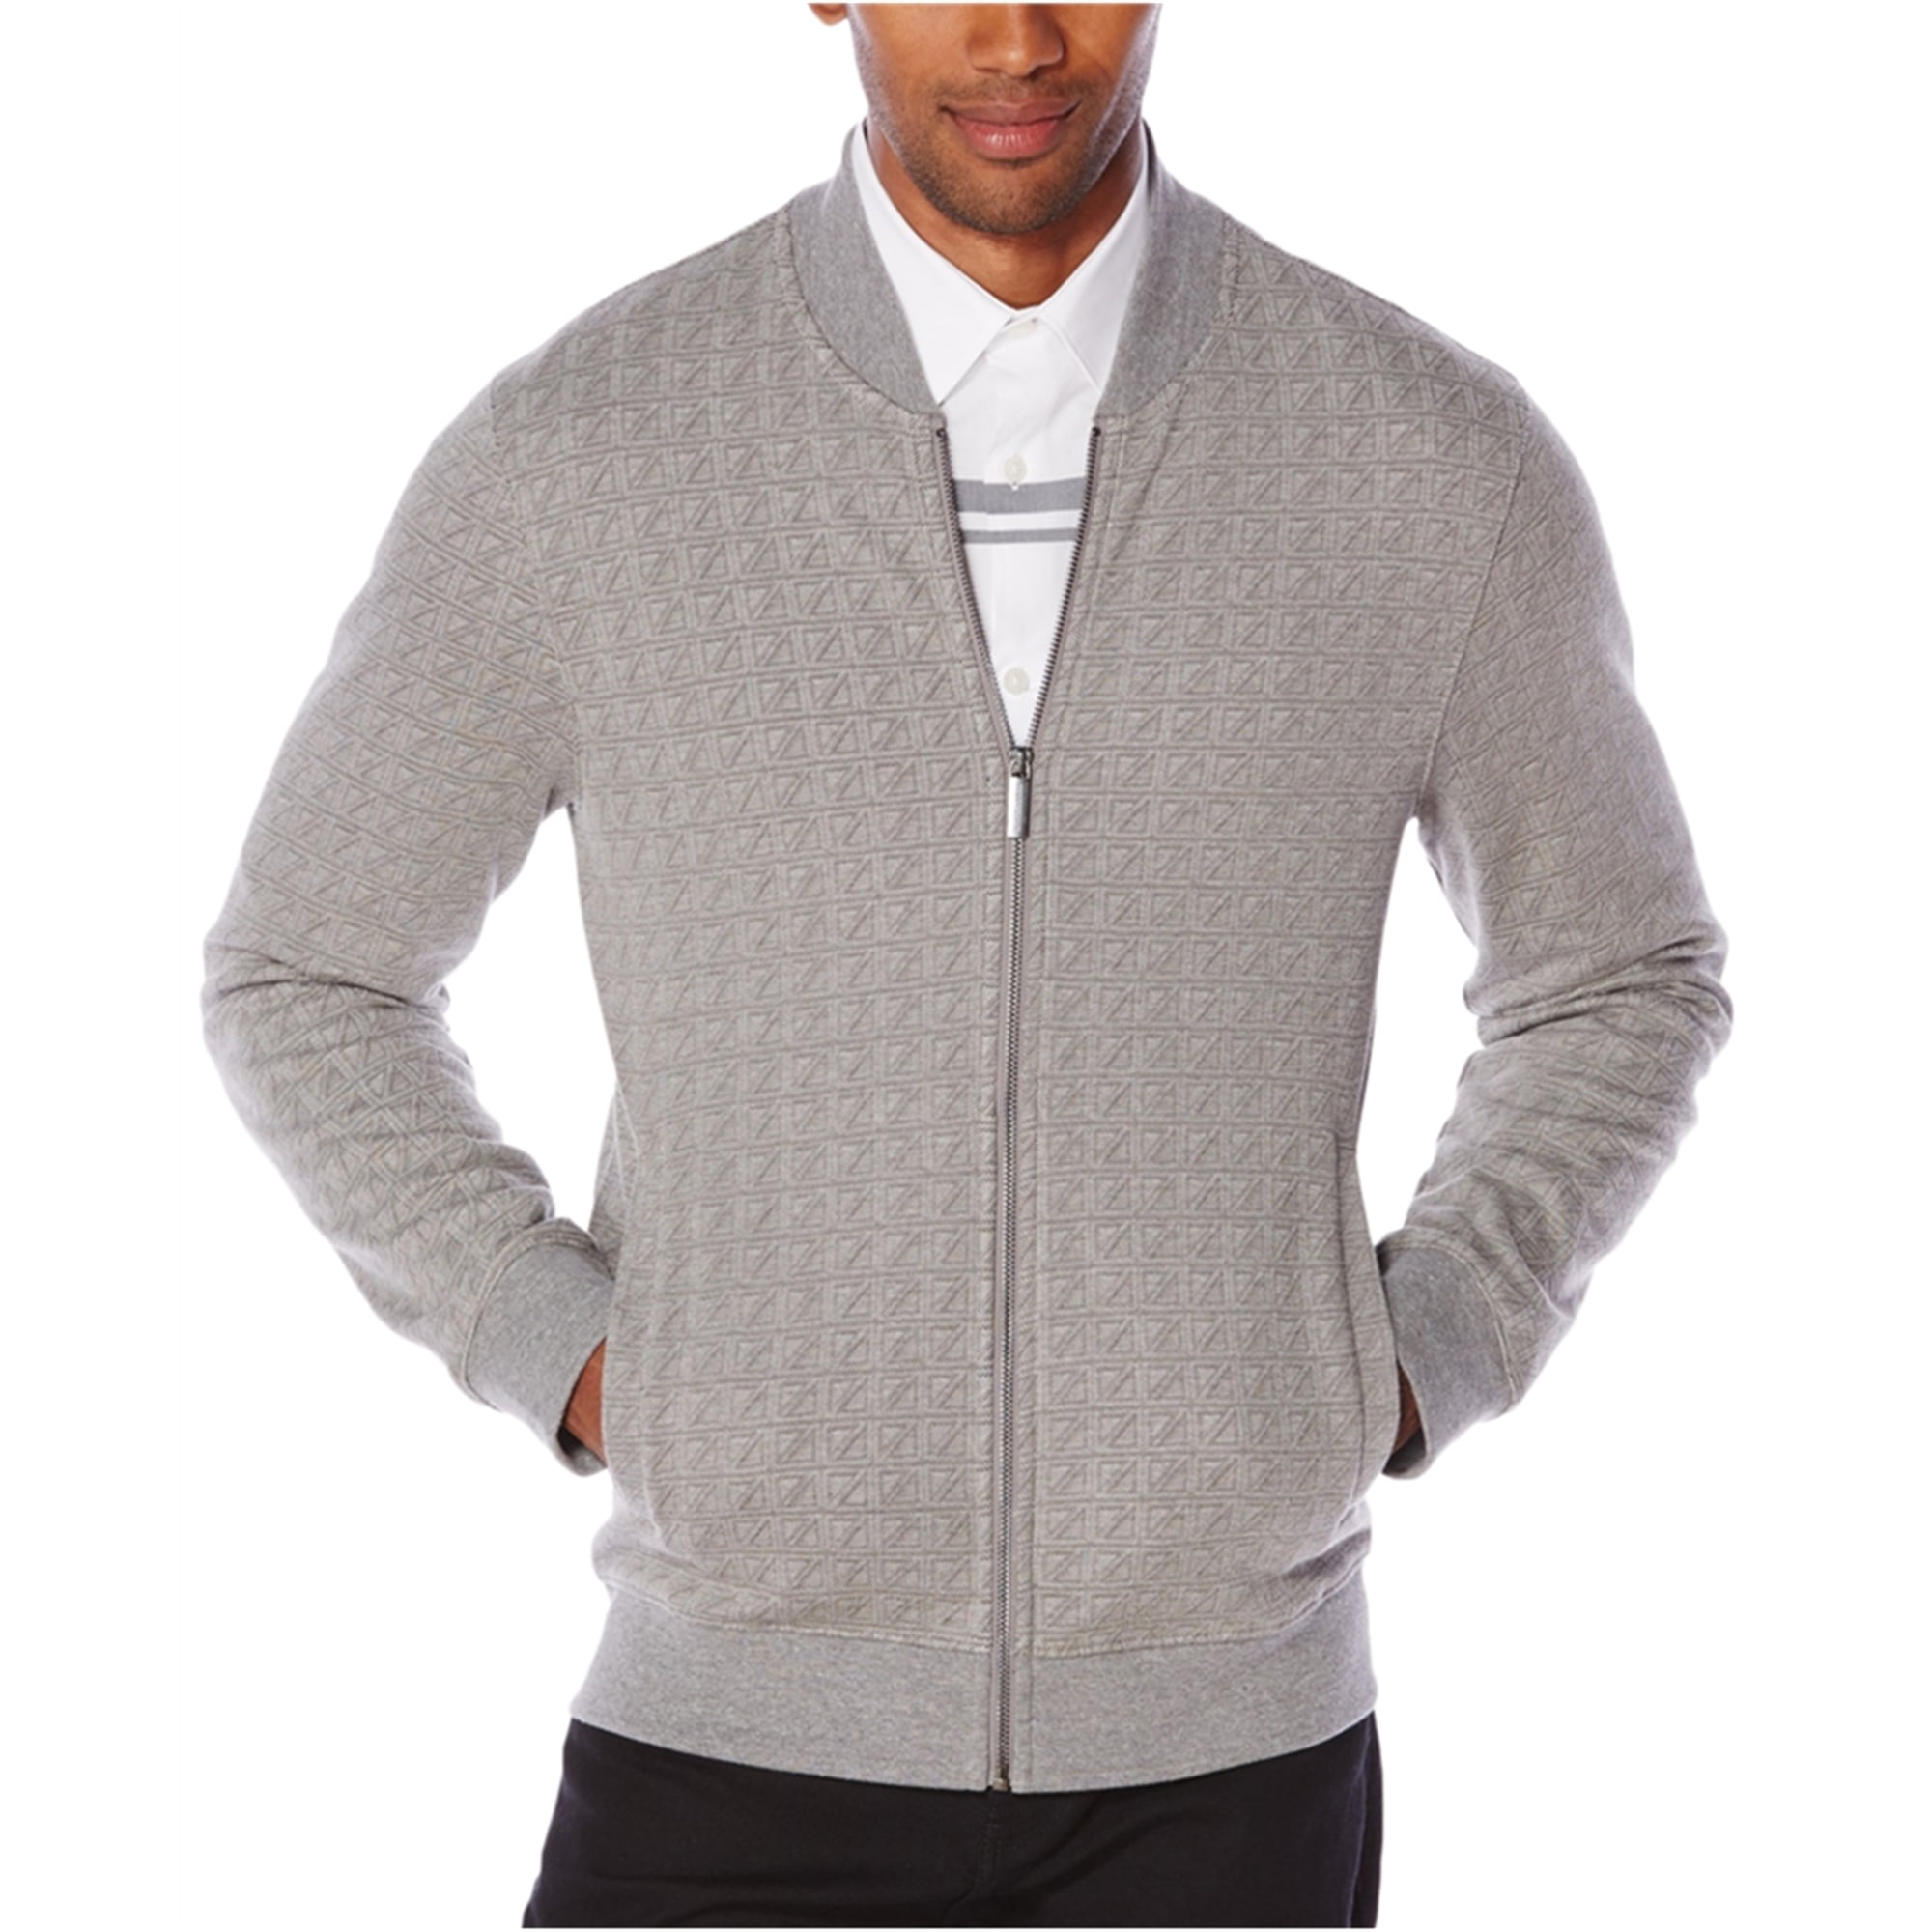 7577-2 Perry Ellis Men's Jacquard Zip-Front Sweater Jacket $89.50 XXL, Black 